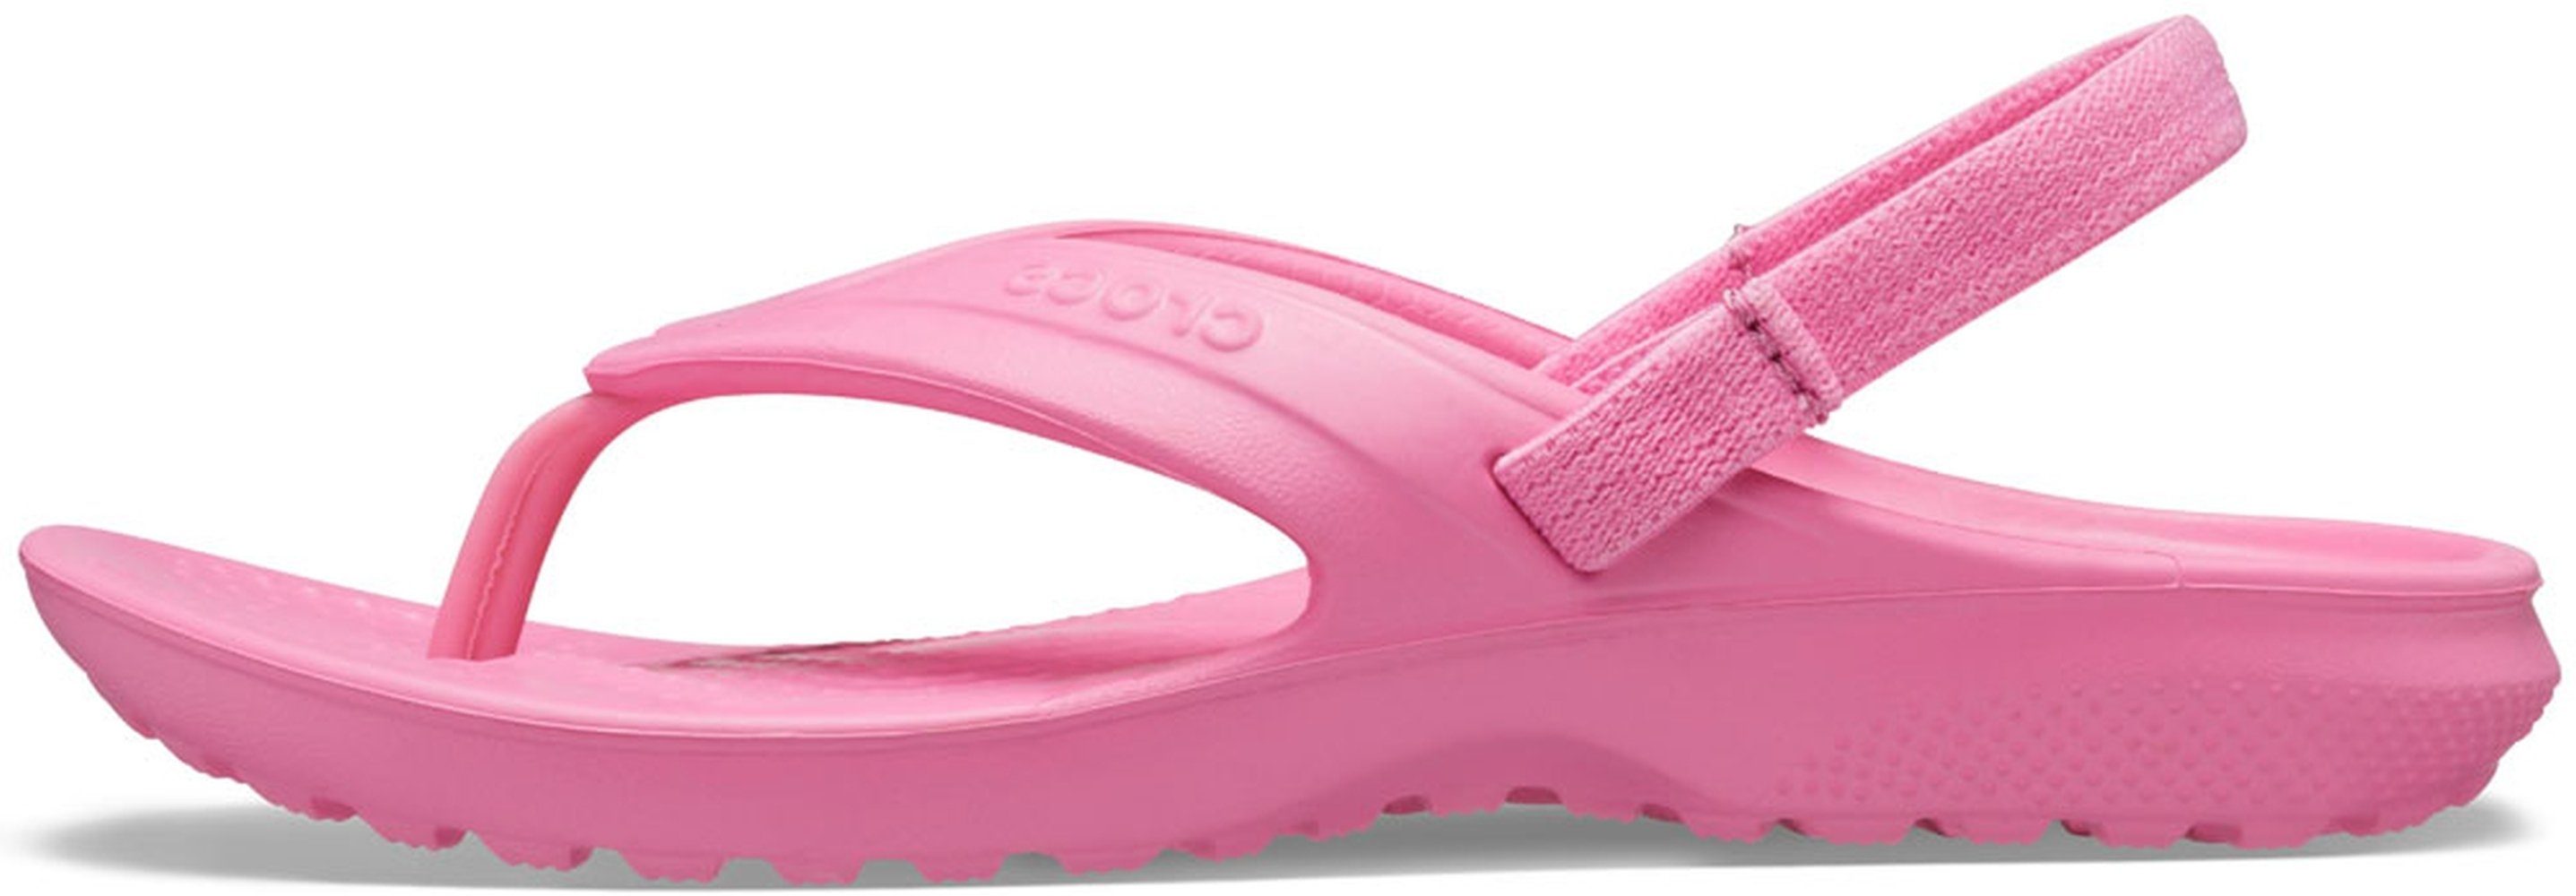 Schuhe Babyschuhe Mädchen Crocs Classic Flip Kids Pantolette